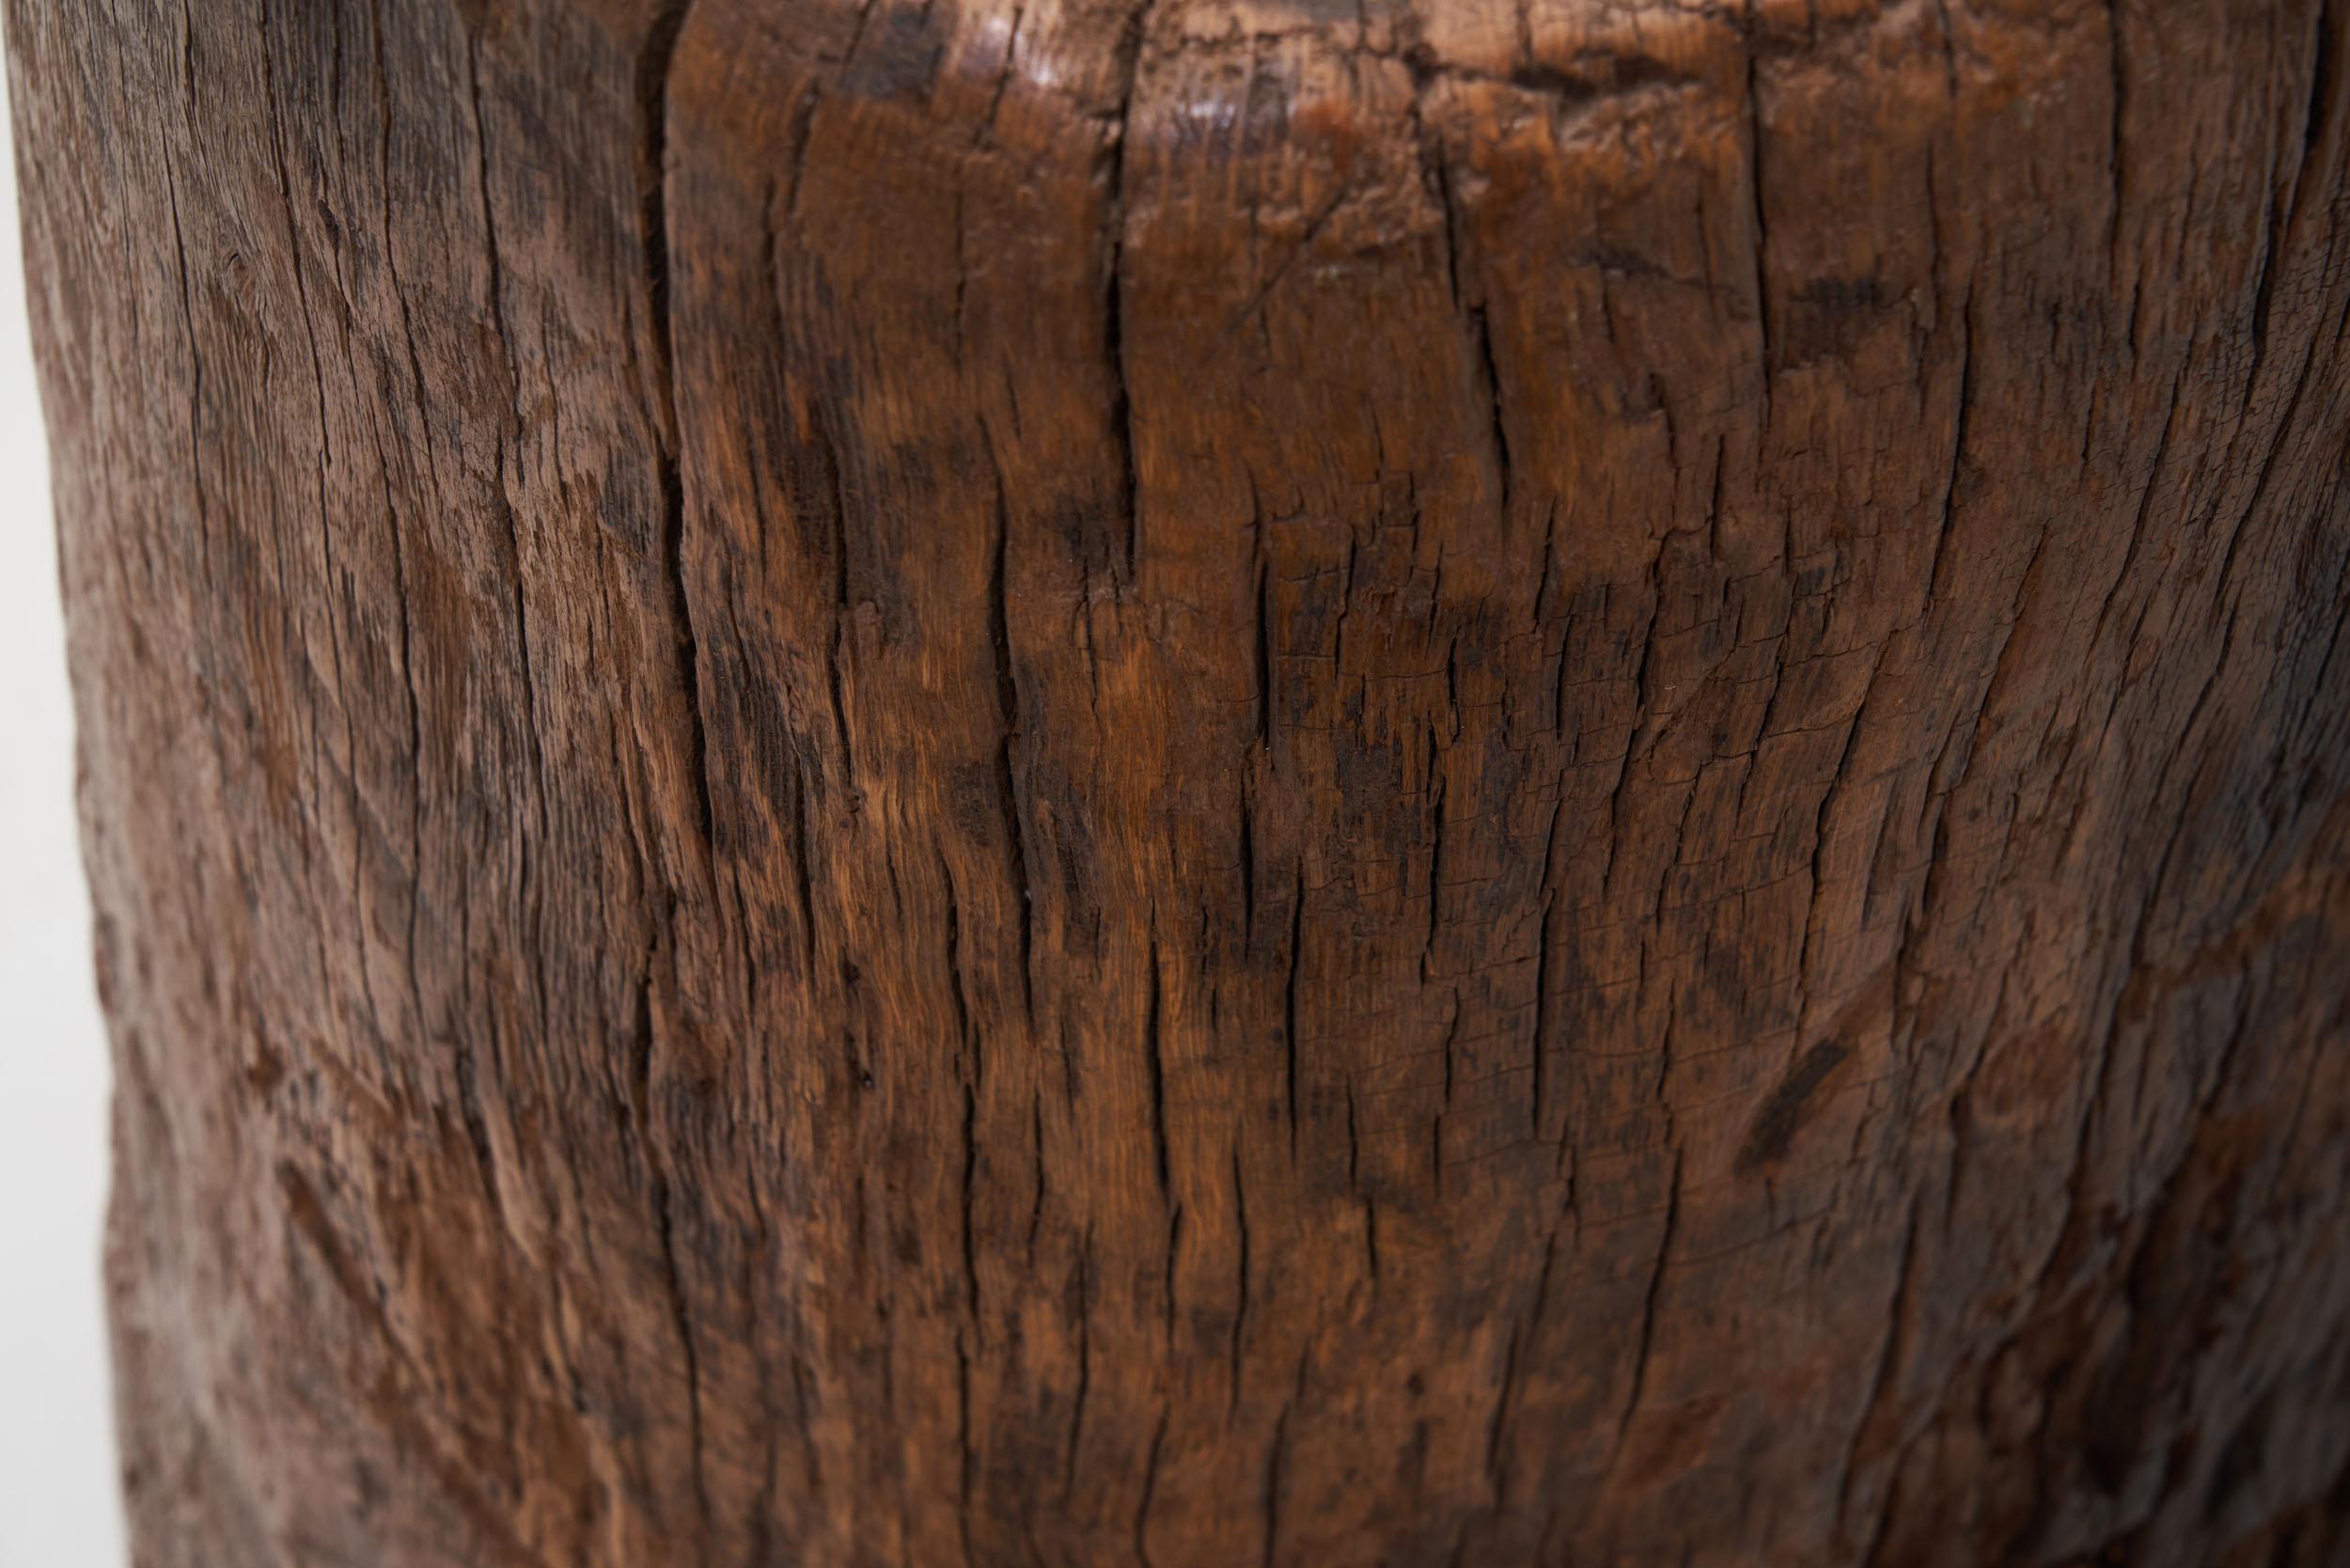 Tibetan Carved Wood “Tête a Tête” Love Seat, Tibet 19th Century For Sale 14